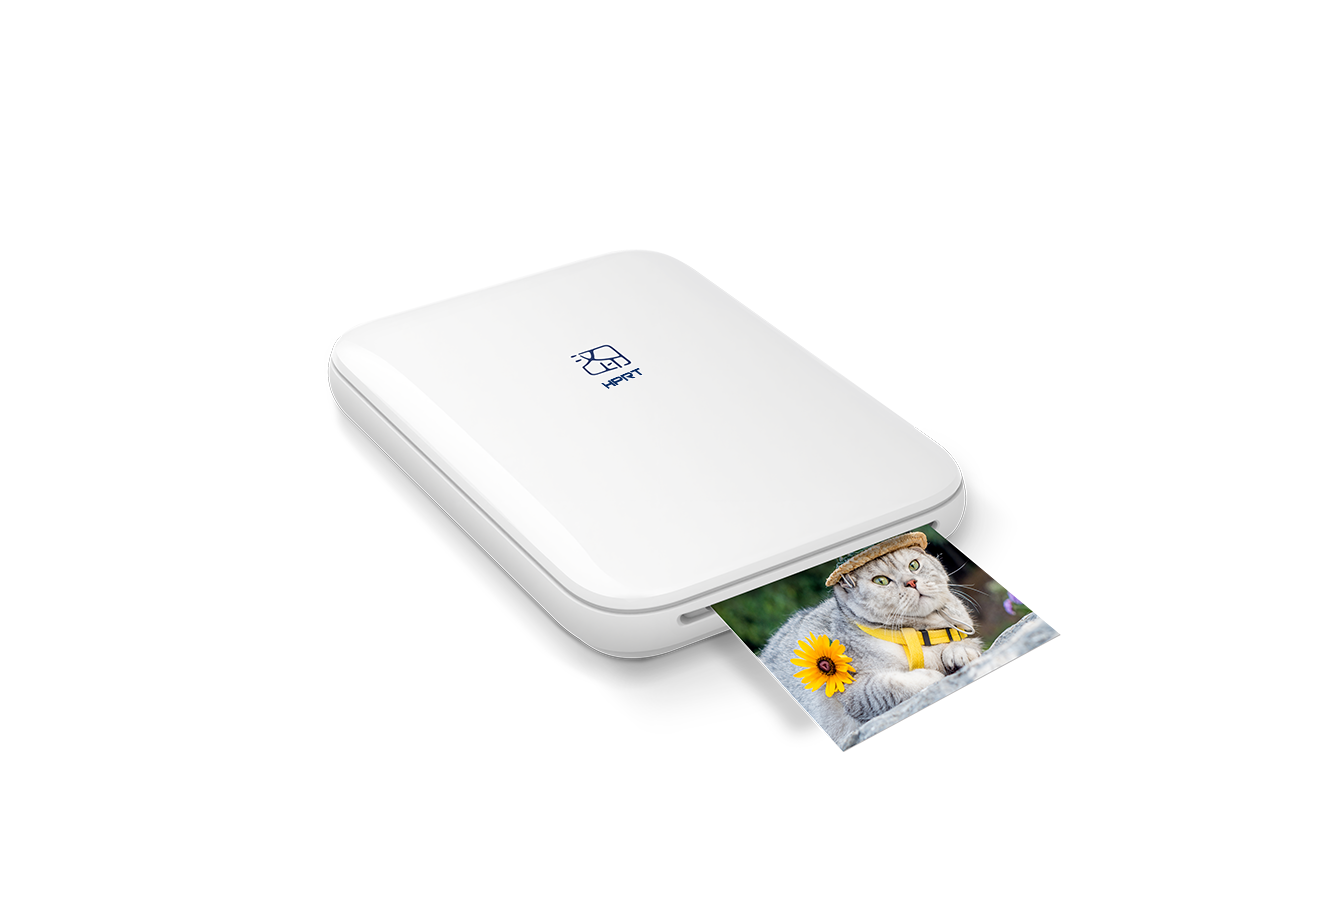 HPRT AR Printer 300DPI Portable Mobile Mini Picture Printing Machine MT53  Pocket DIY Share 550mAh Zink Color Photo Printer - AliExpress